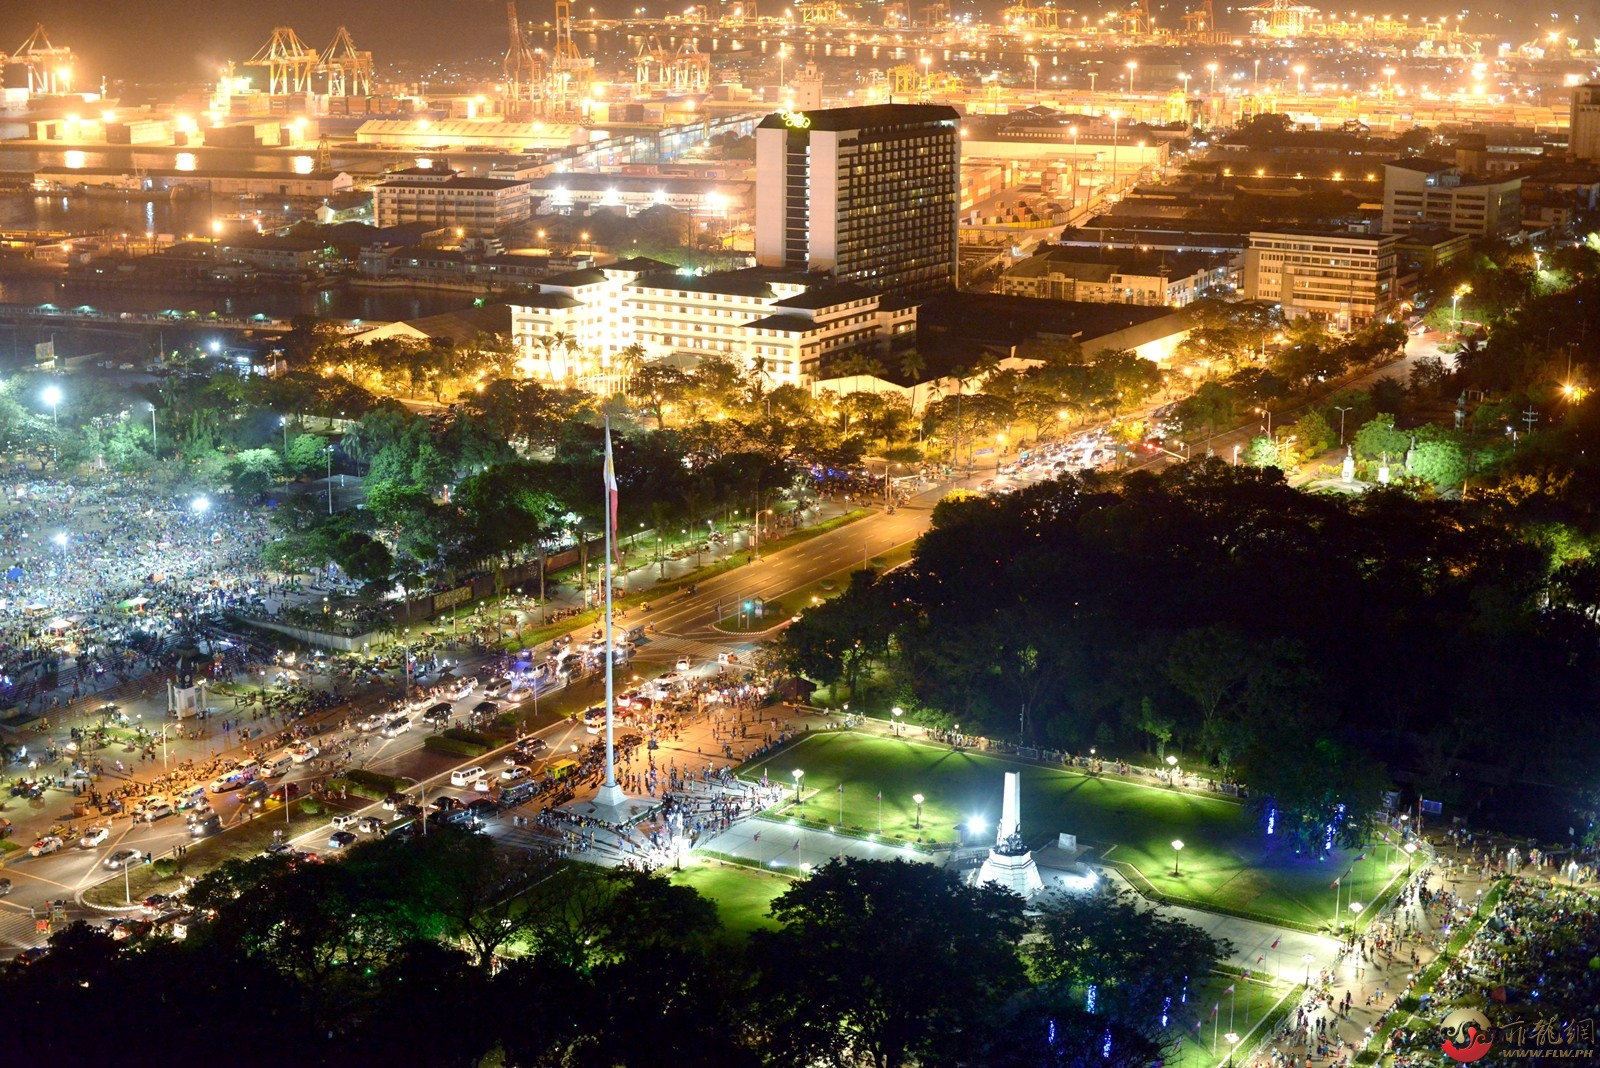 Rizal Park 1-1-2014 (1).JPG